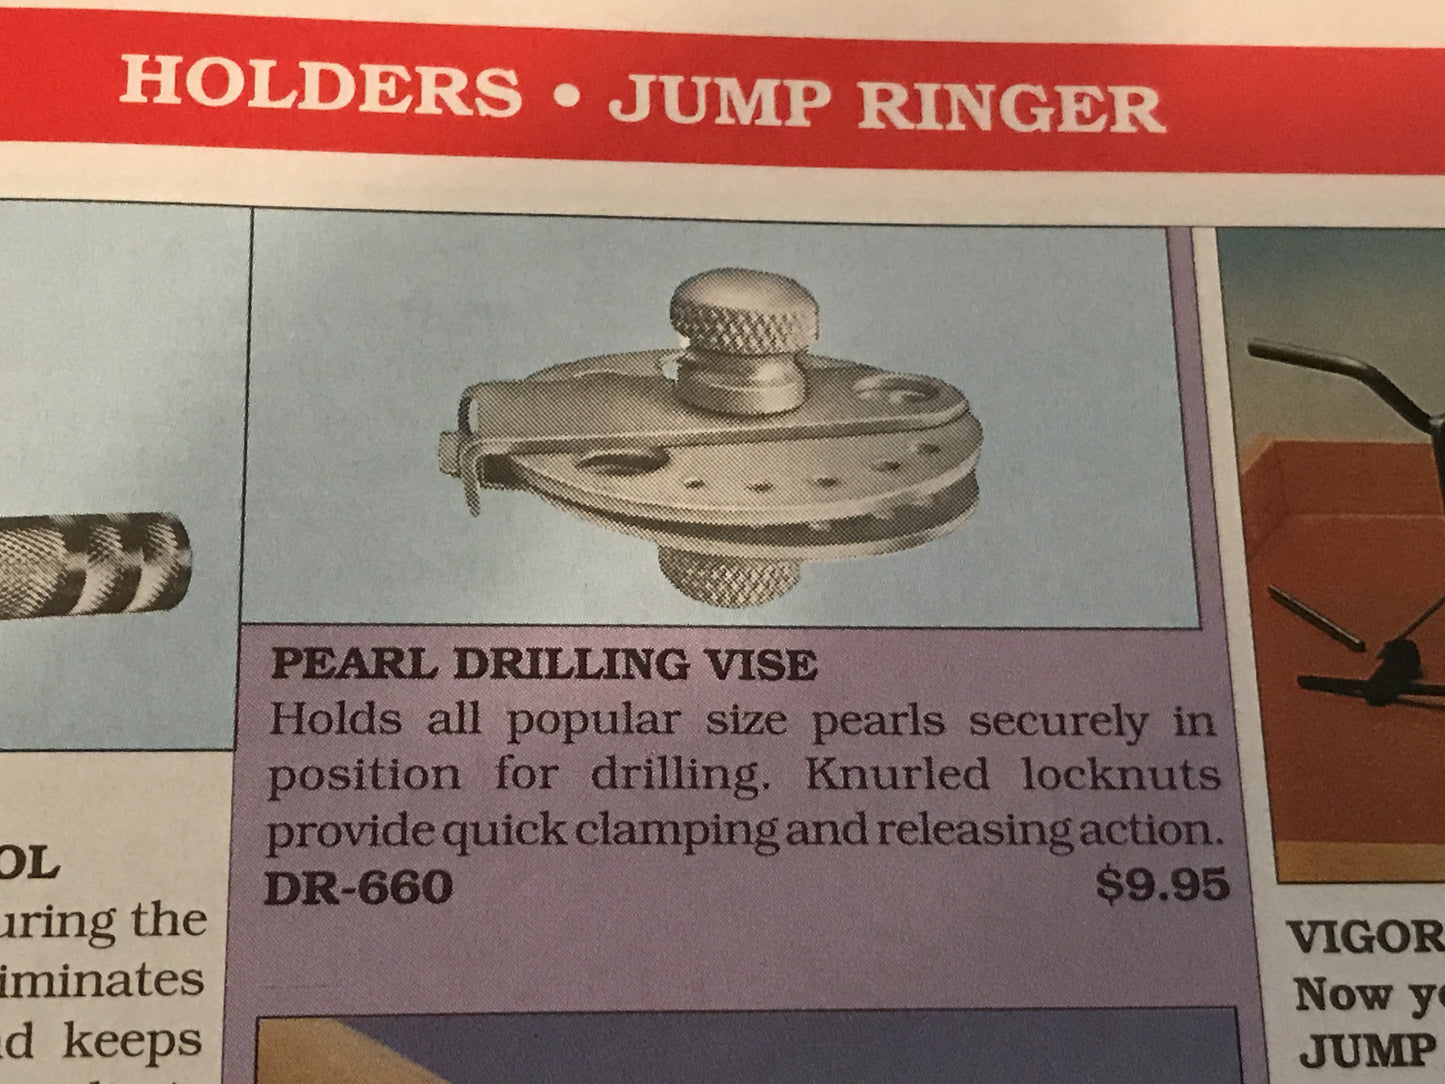 VIGOR Pearl Drilling Vise DR-660